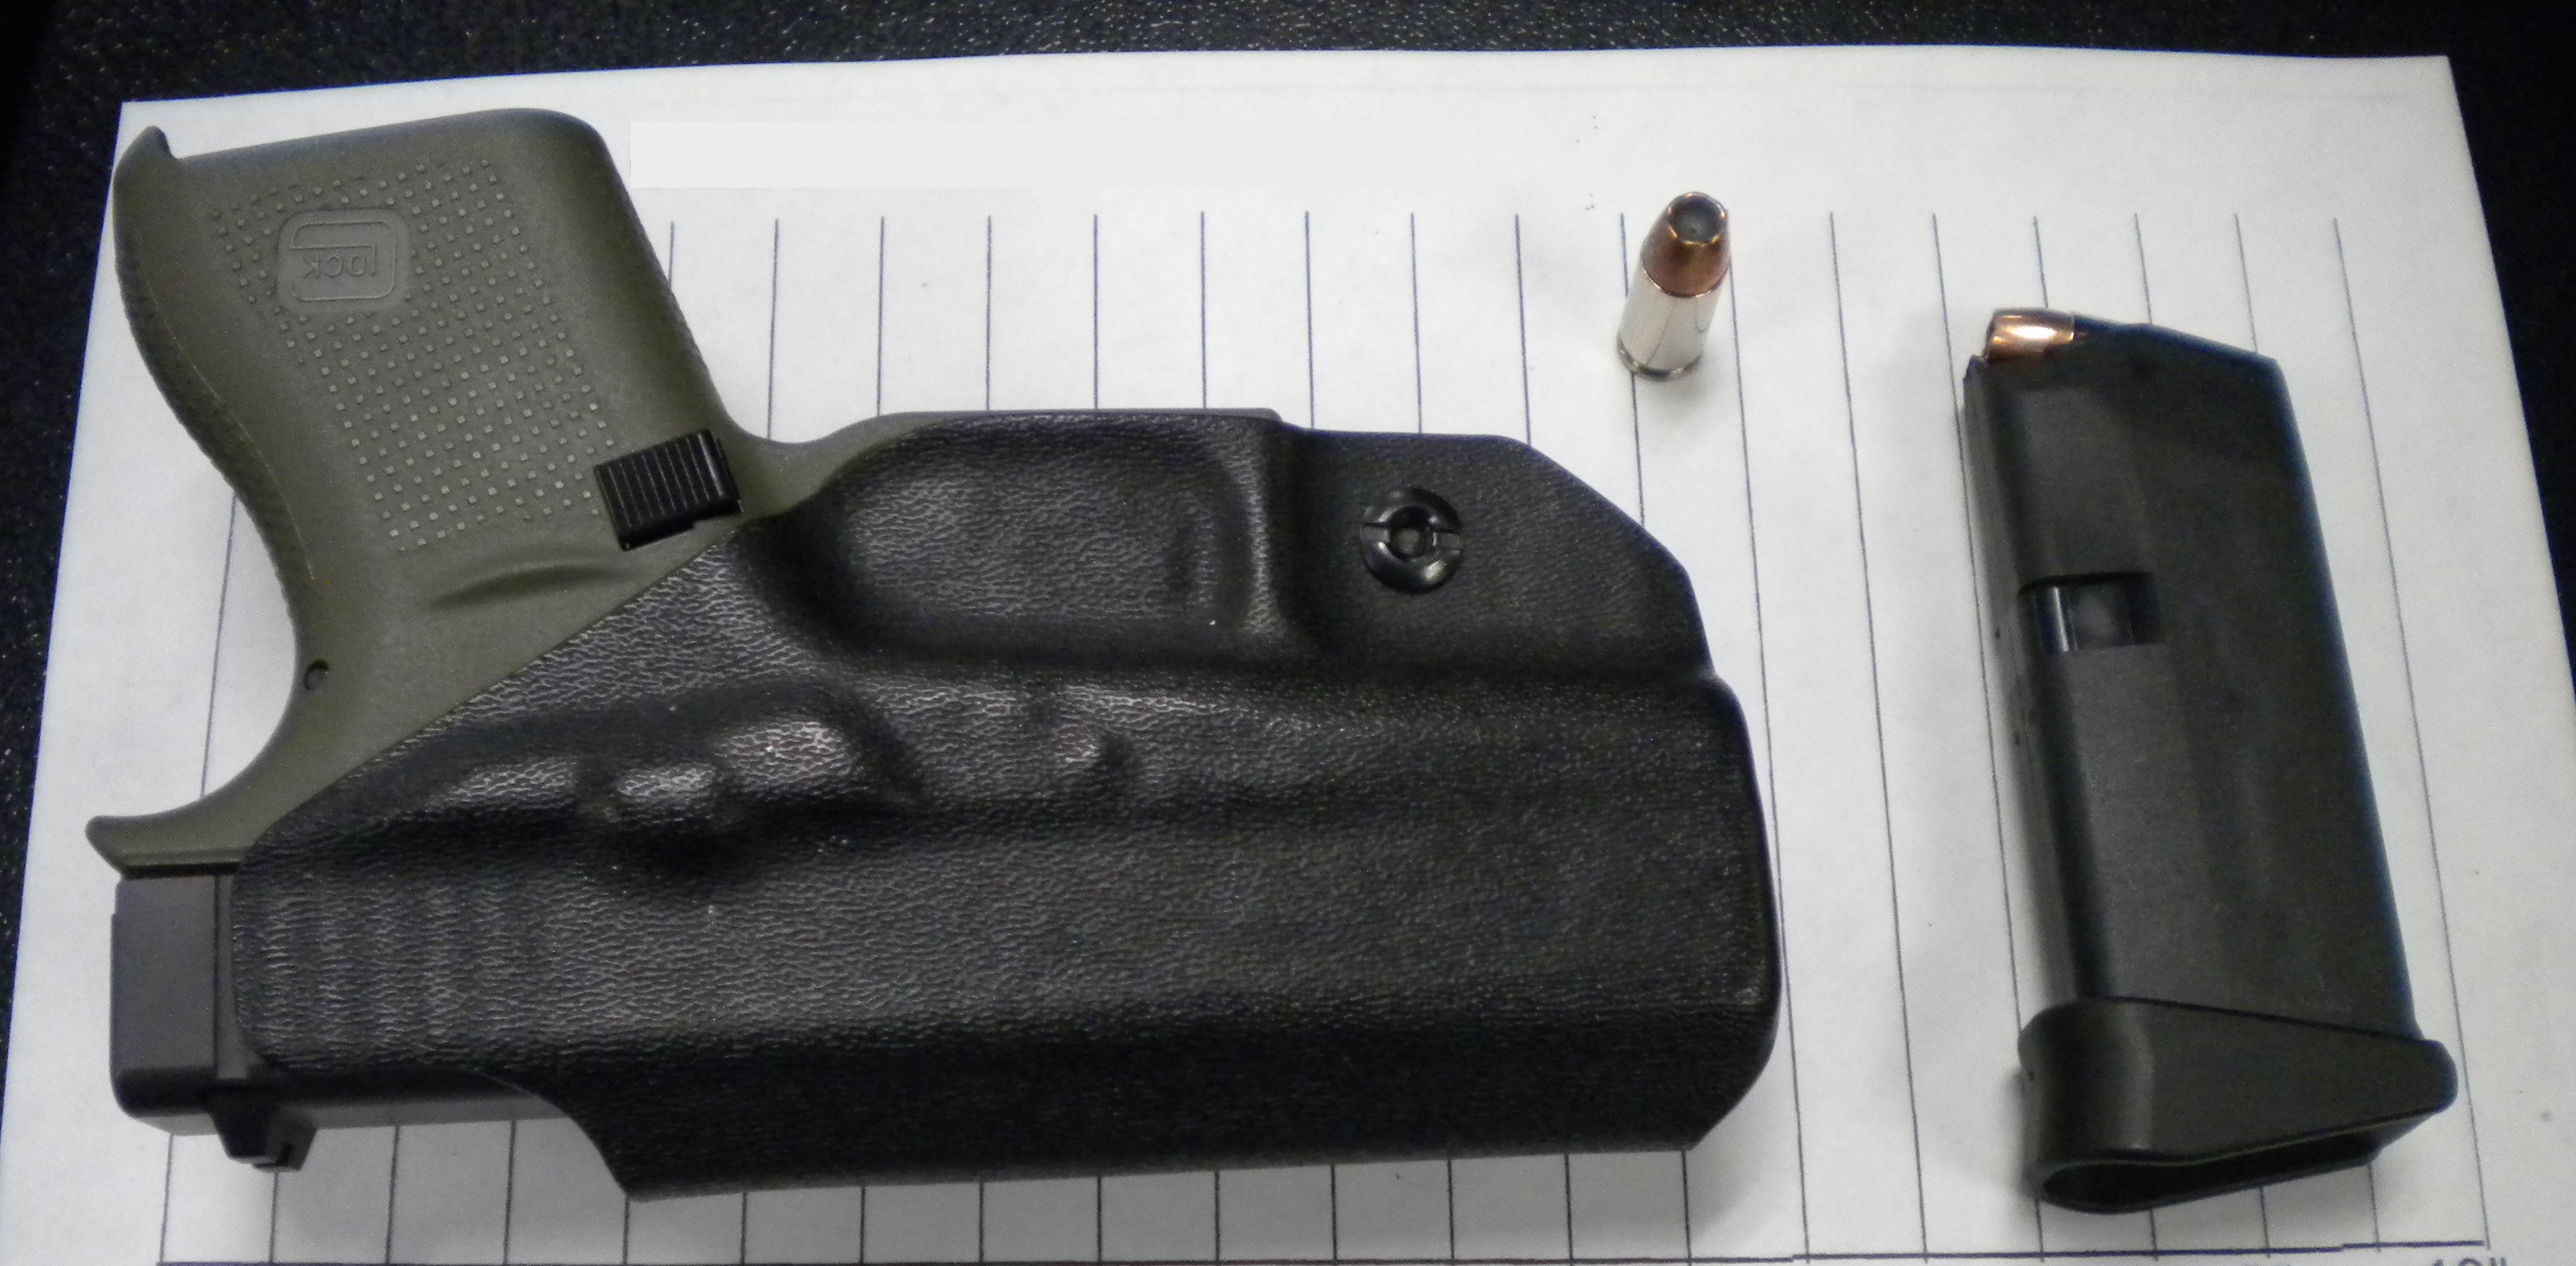 Firearm discovered by TSA at Burbank Airport